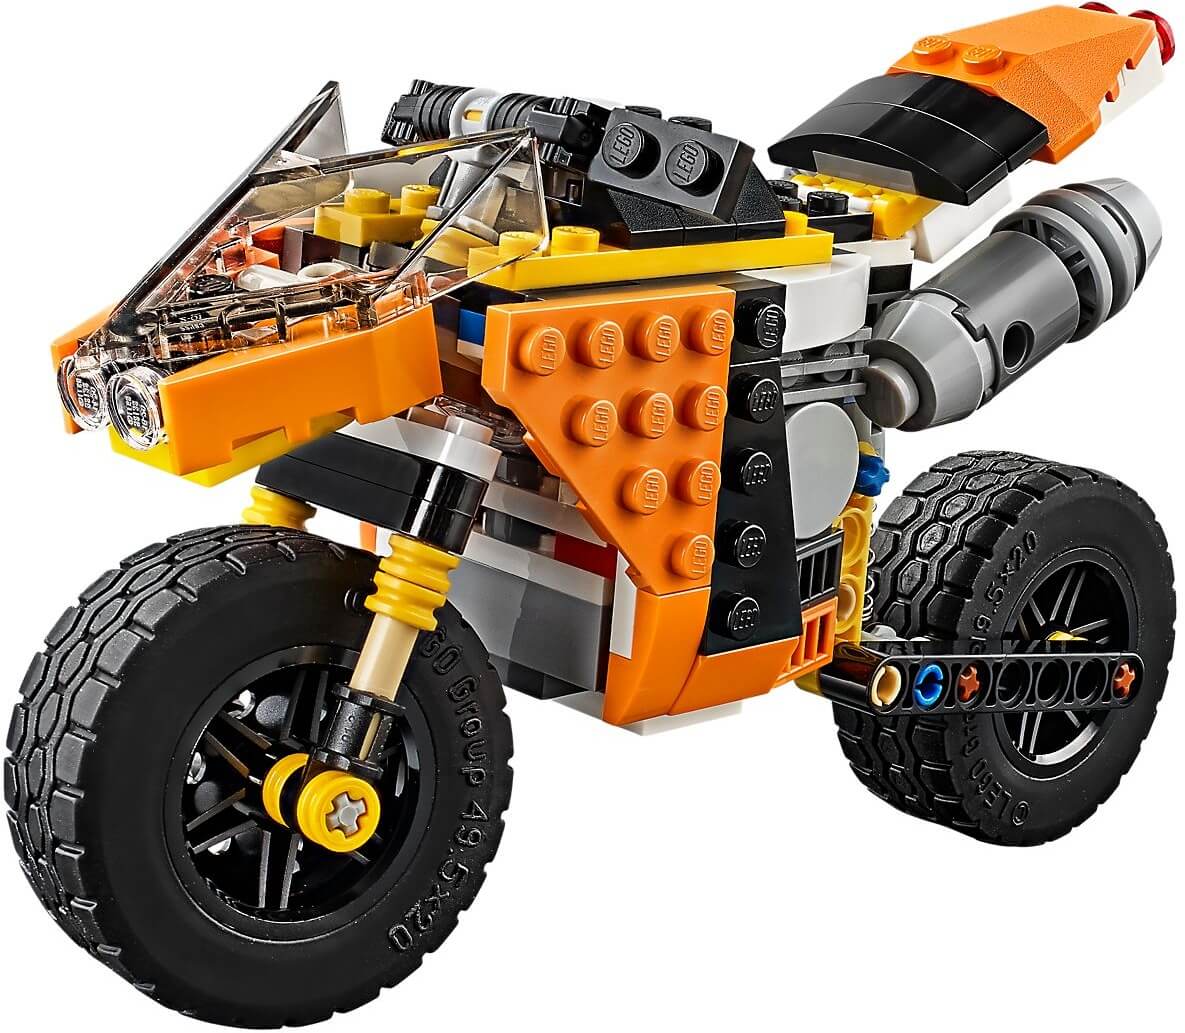 Gran moto callejera ( Lego 31059 ) imagen a